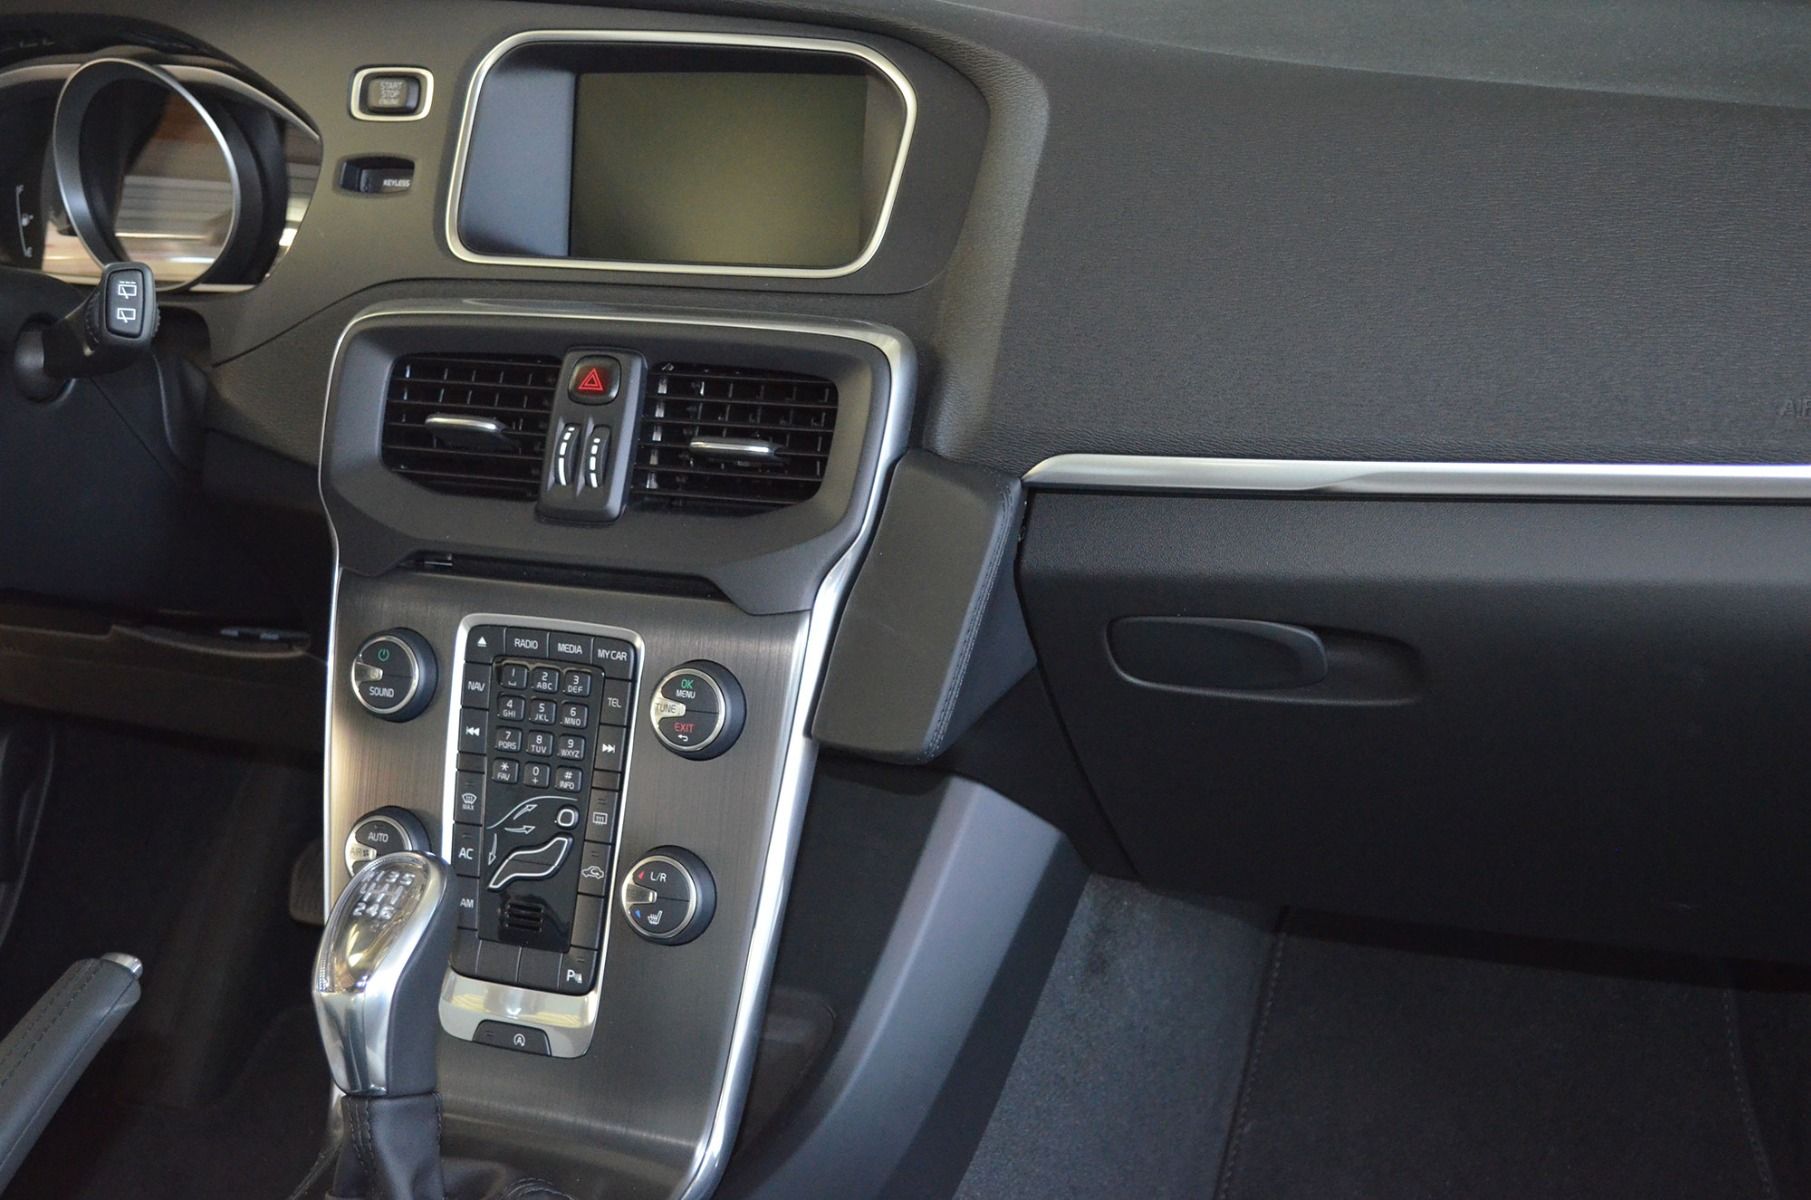 Kuda console Volvo V40 10/2012-